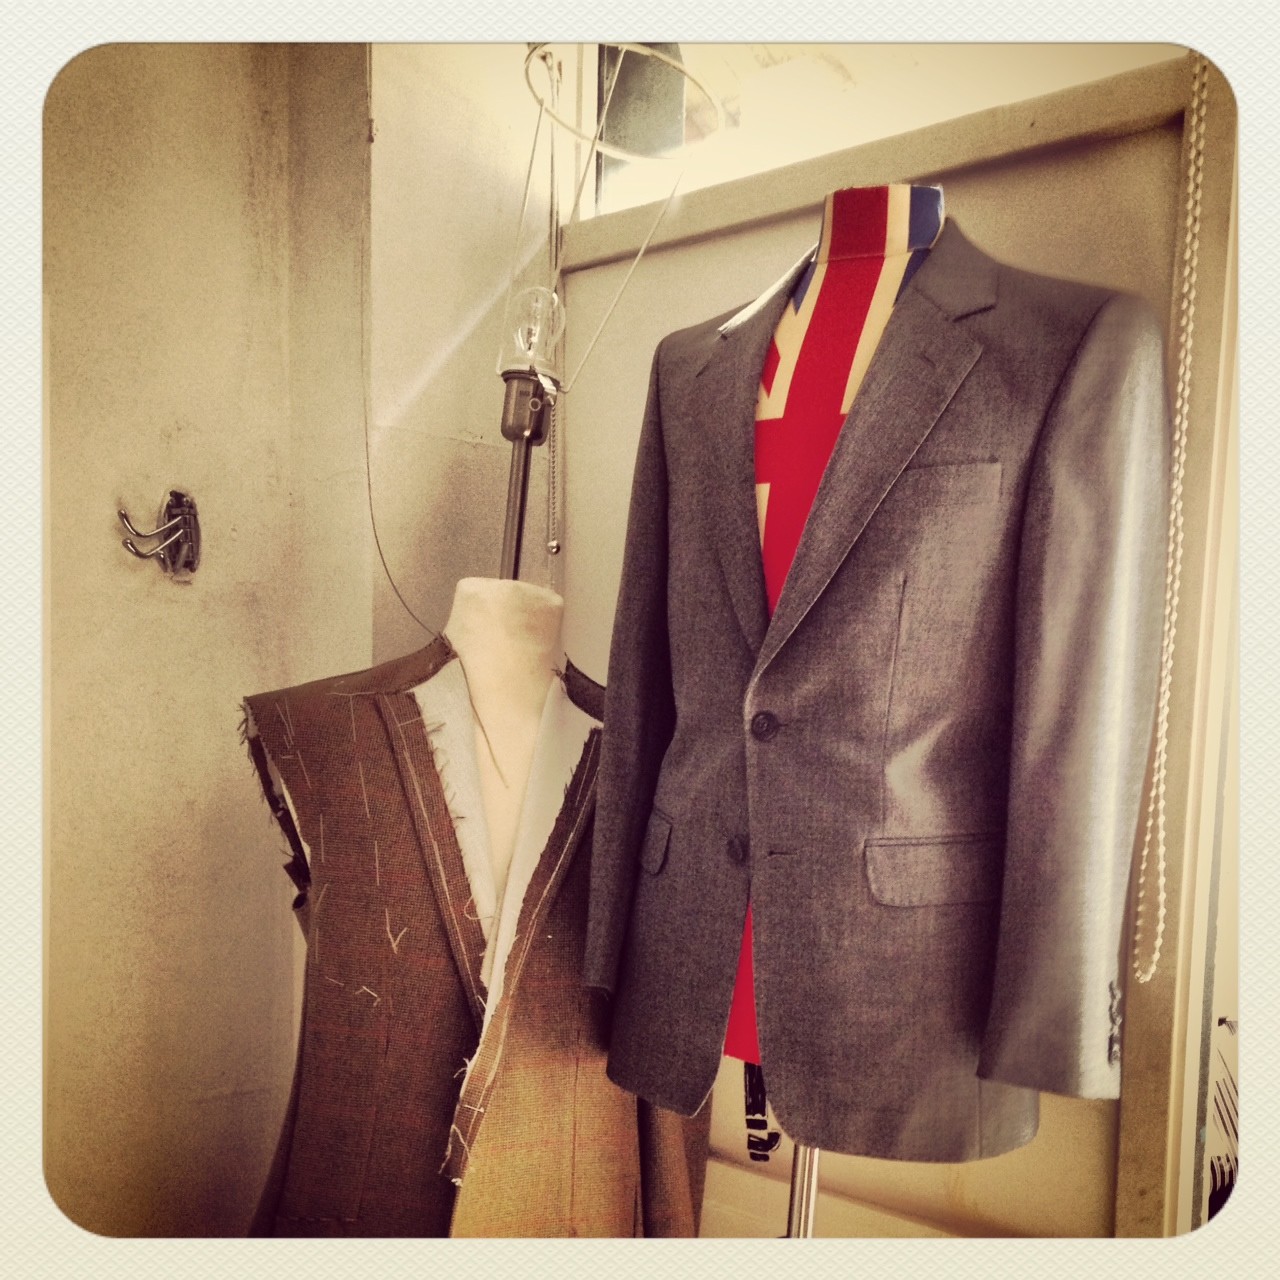 An alternative use for Savile Row bespoke tailoring!